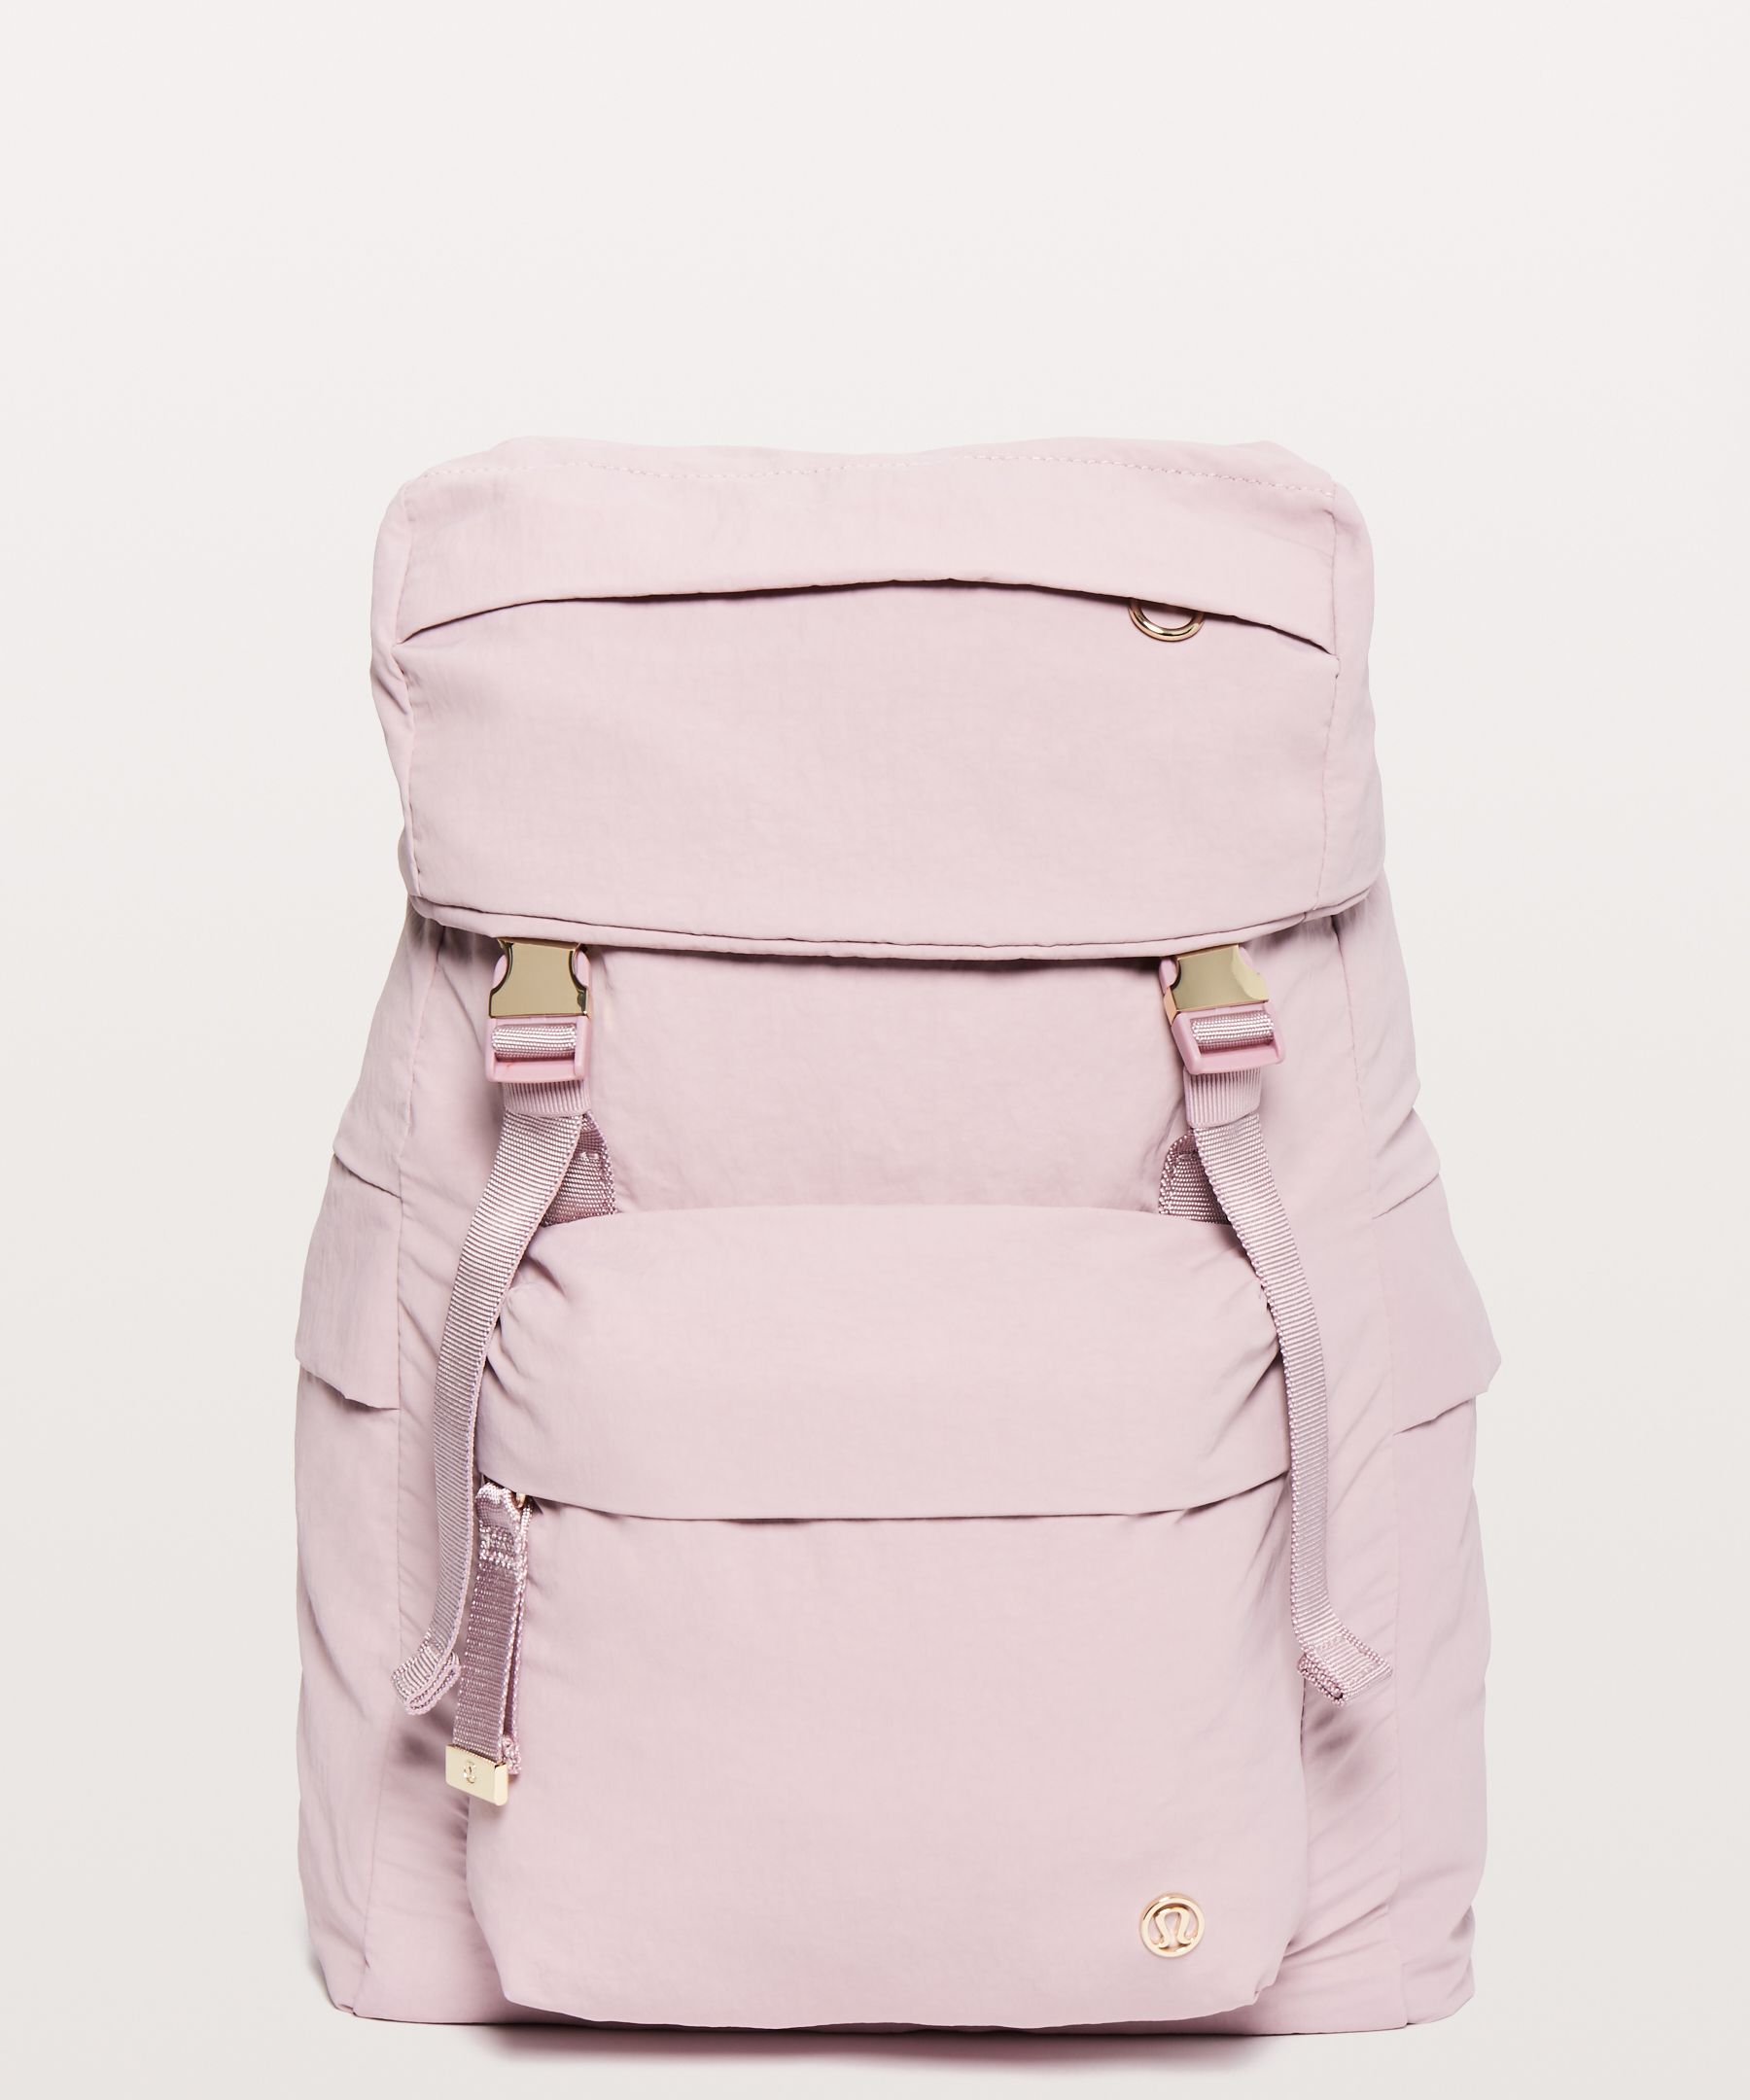 lululemon commuter backpack